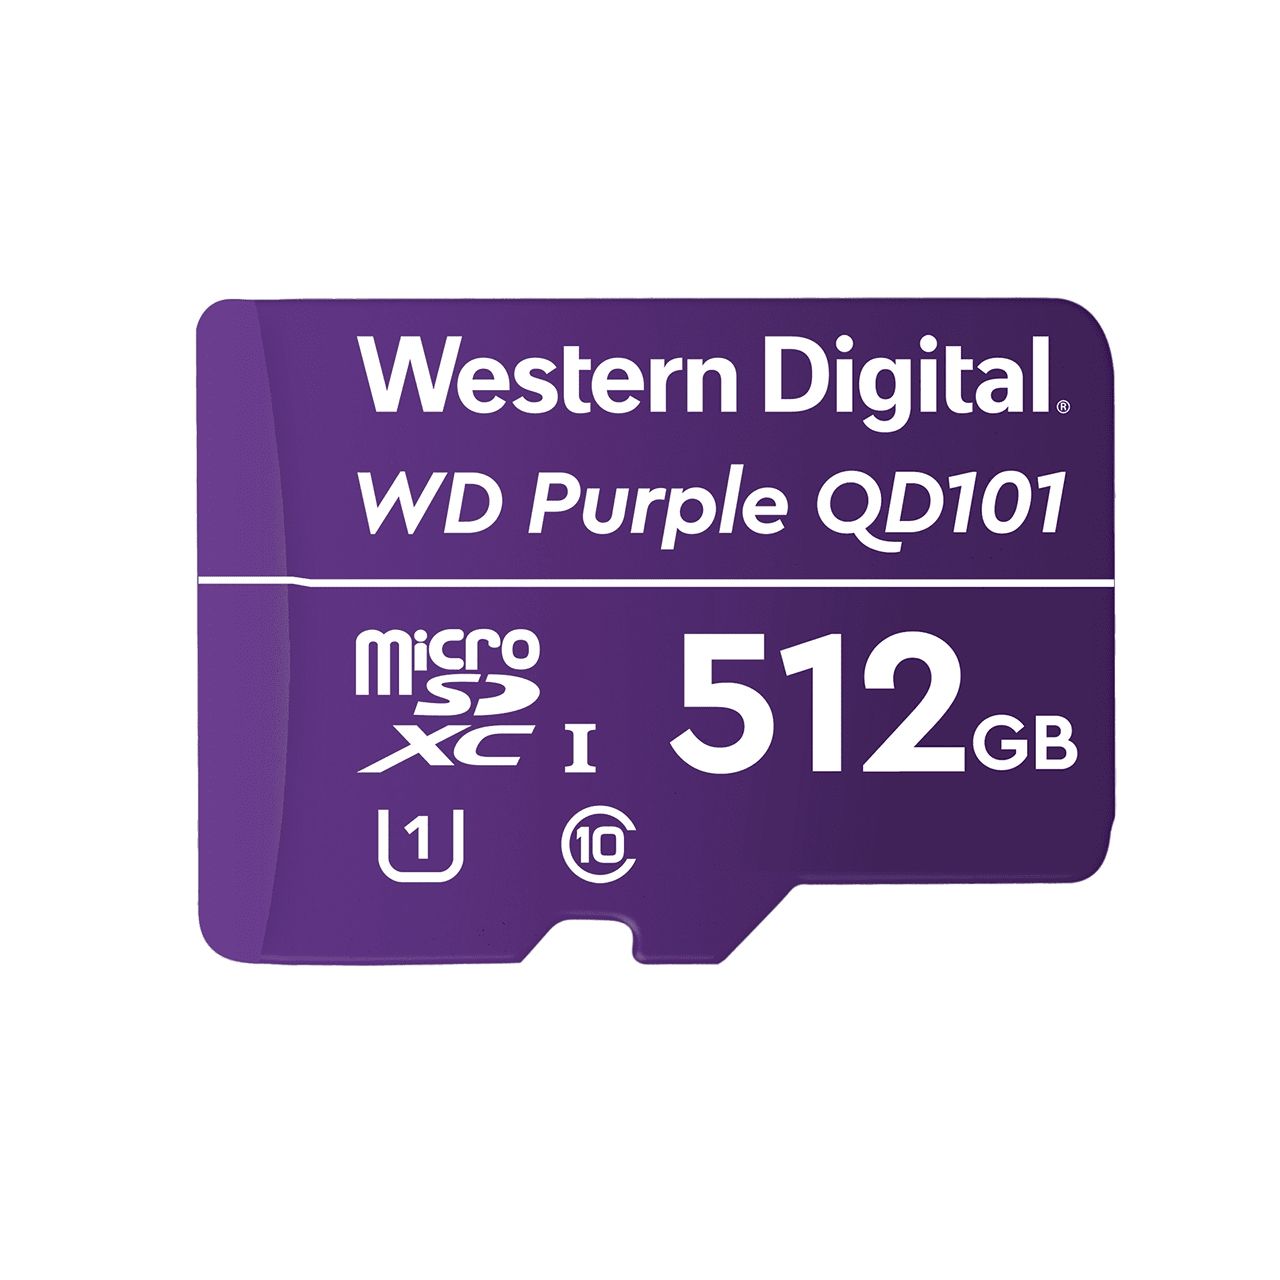 Paměťová karta Western Digital WD Purple SC QD101 512 GB MicroSDXC Class 10 od ninex.cz